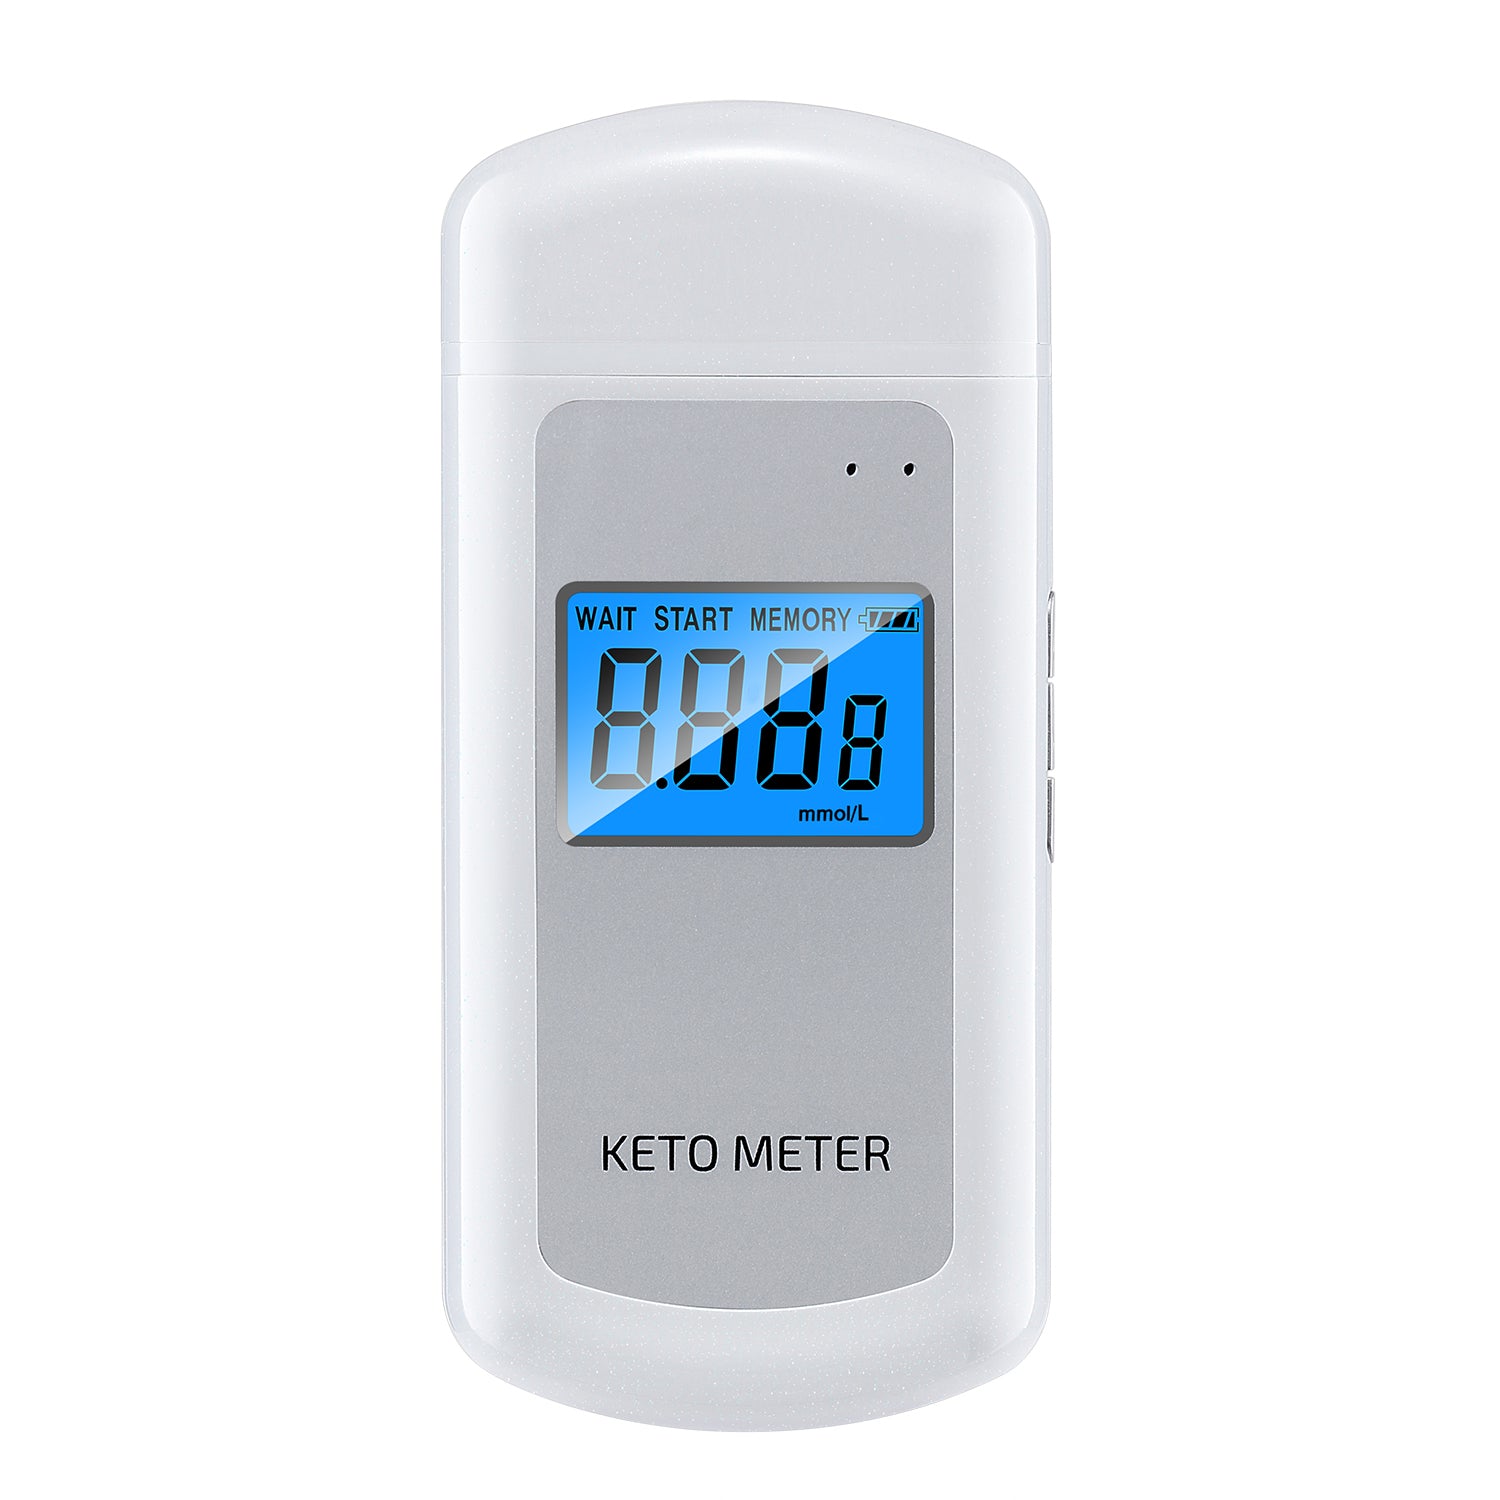 Ketone Breath Analyzer, Ketone Meter With 3 Led Indications